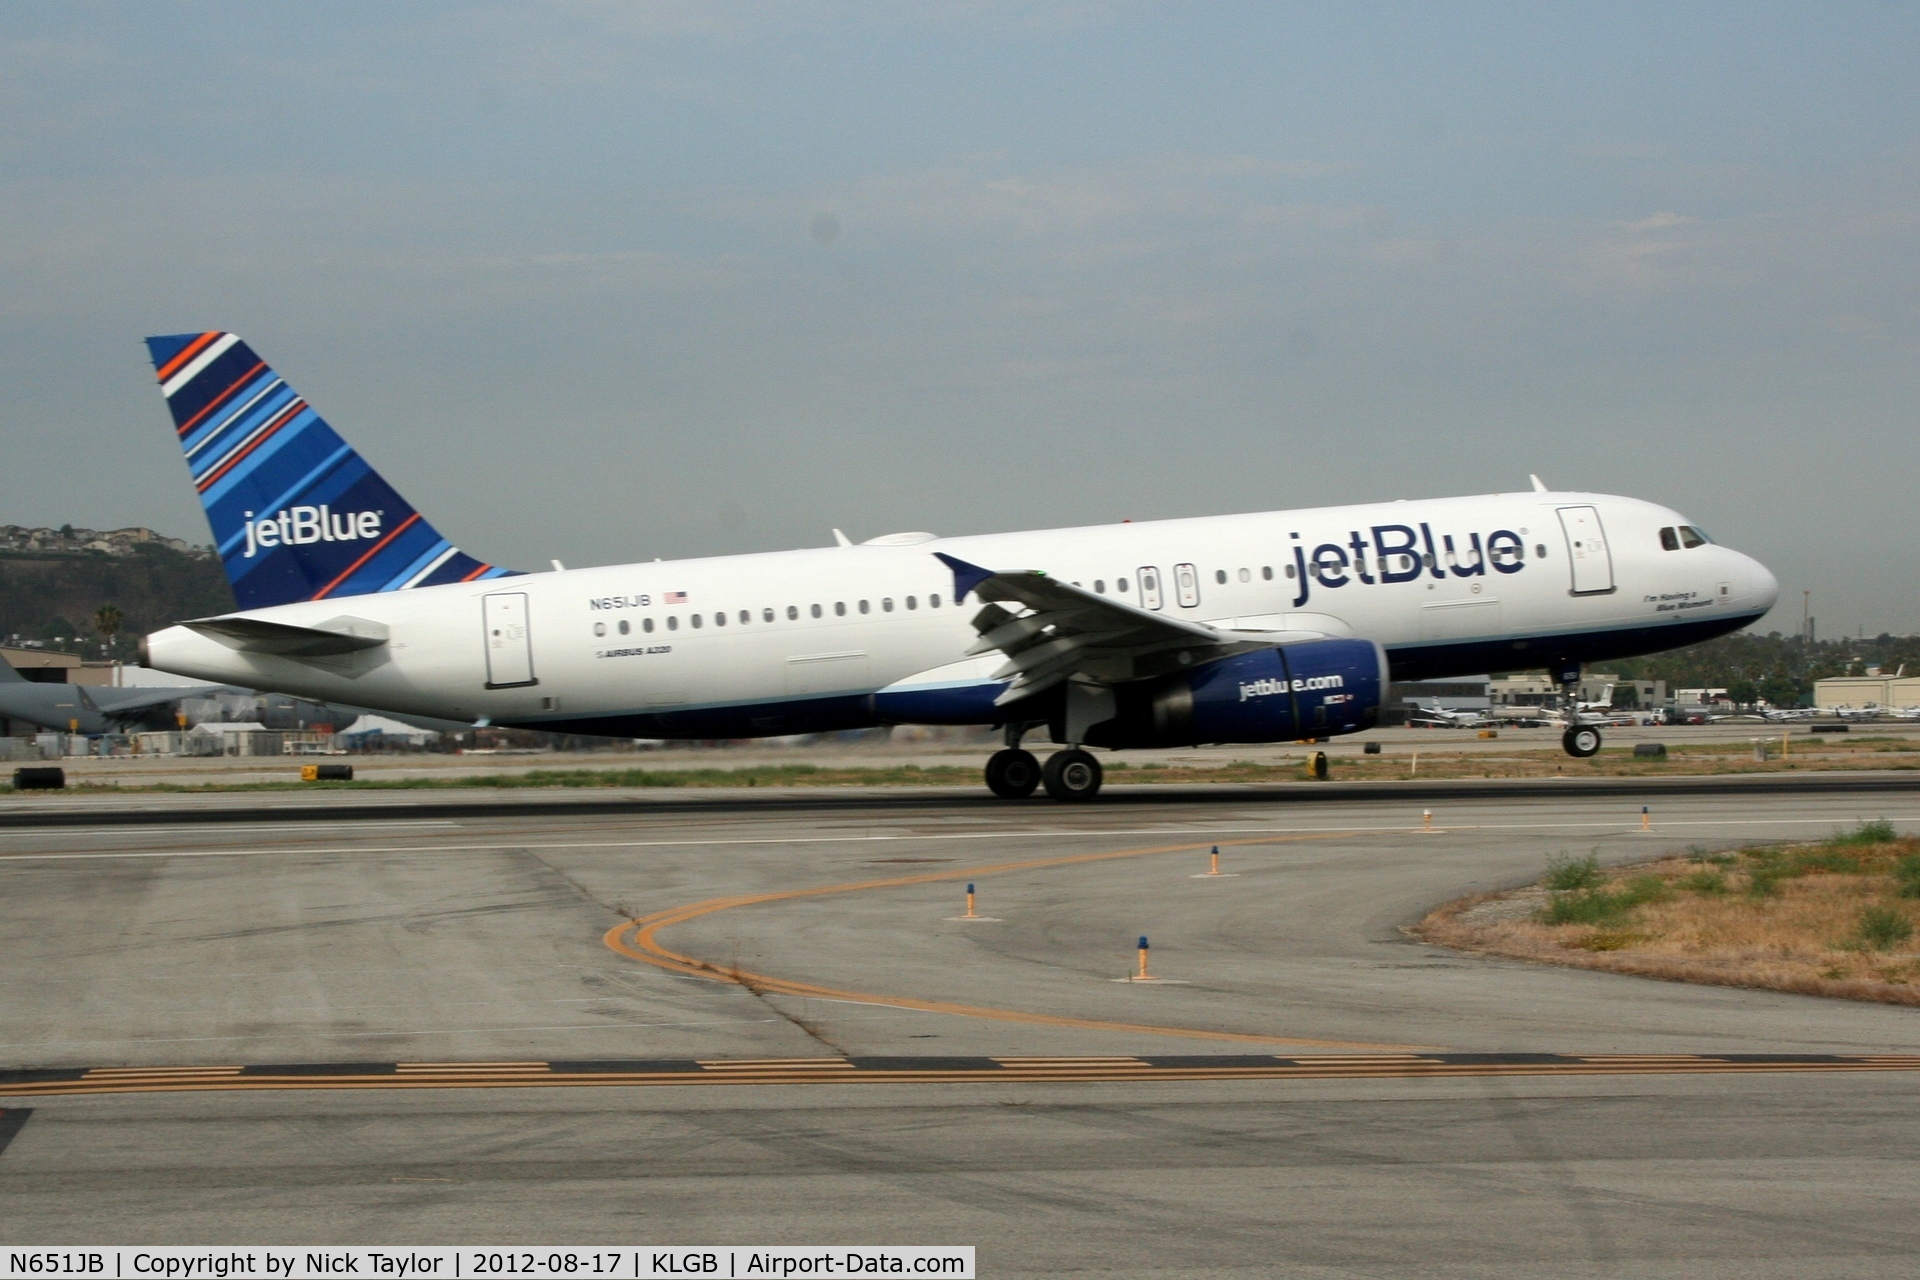 N651JB, 2007 Airbus A320-232 C/N 2992, JetBlue landing on Rwy 30